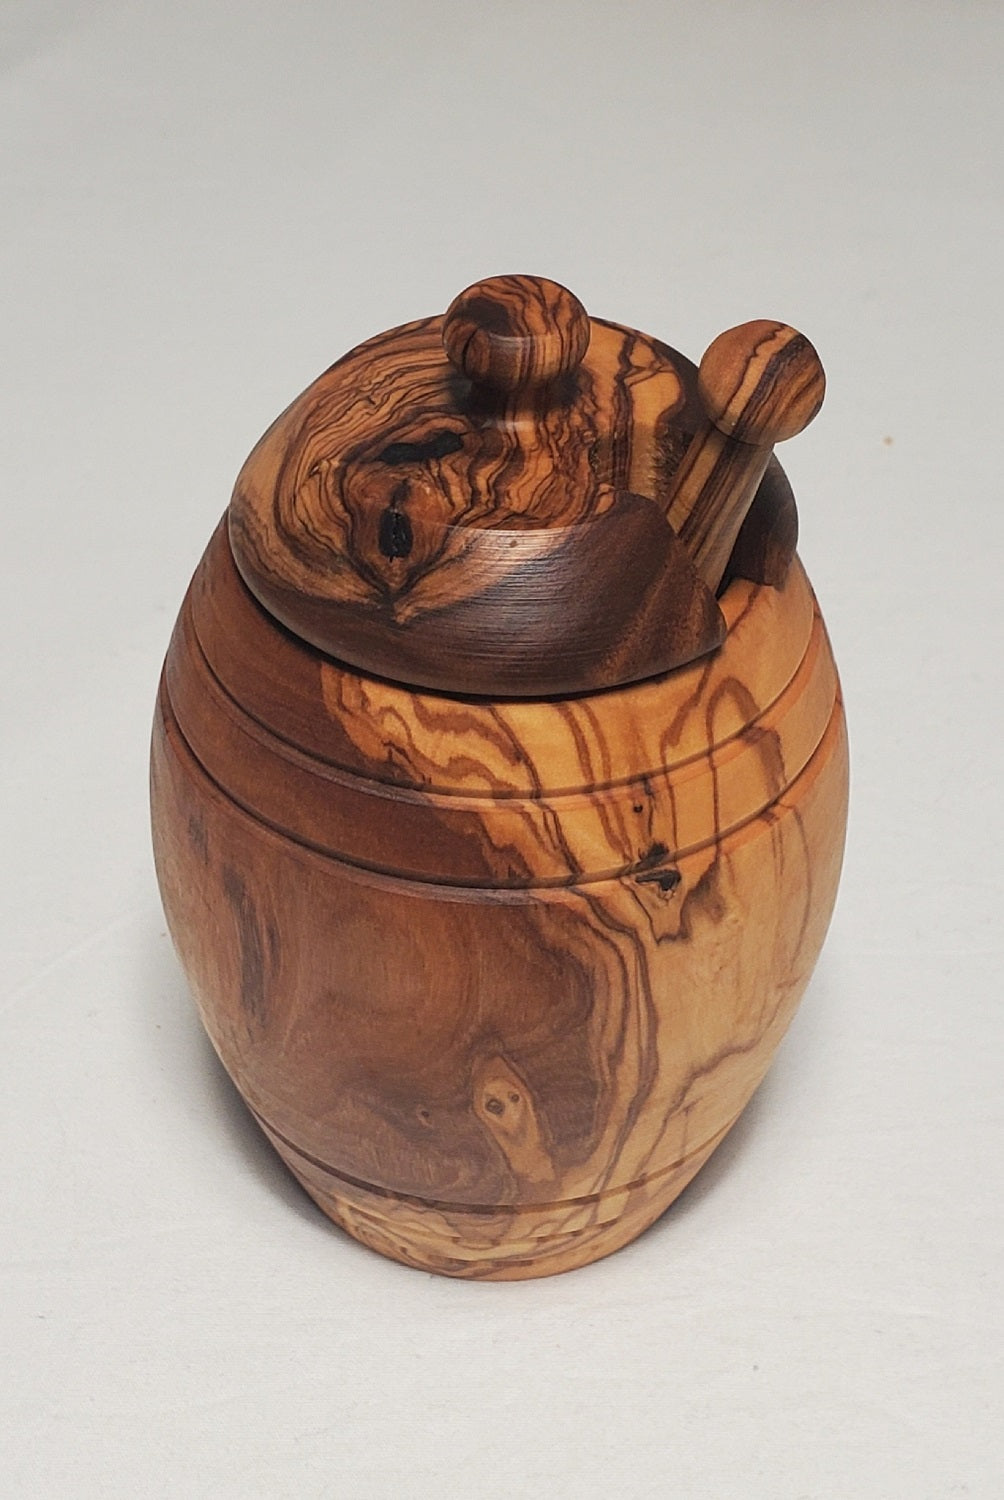 OLIVIKO 100% olive wood Honey pot, Jar with a dipper